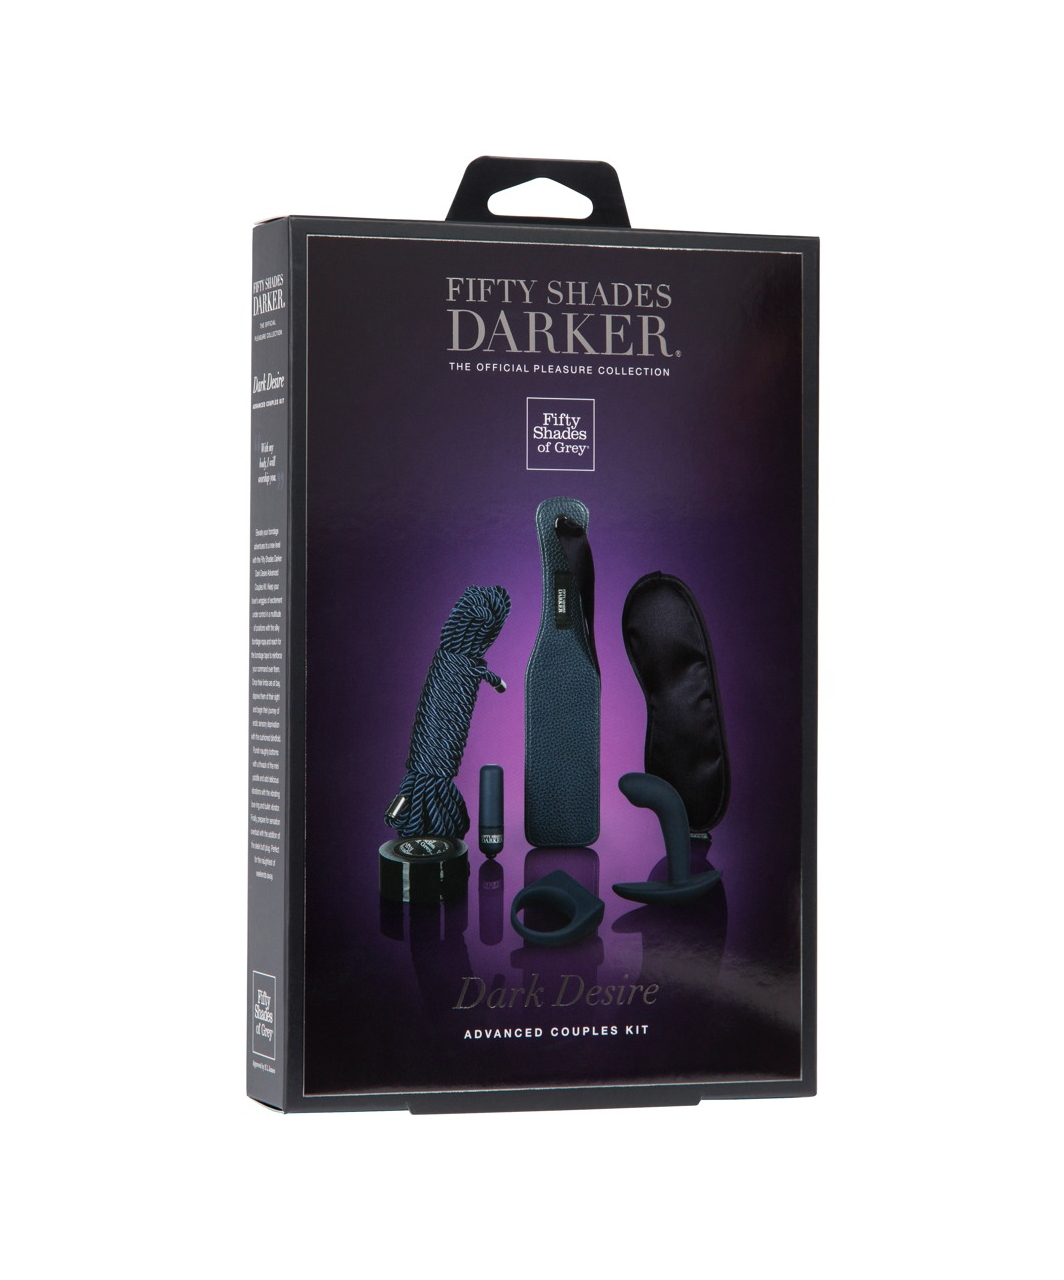 Fifty Shades of Grey Darker Dark Desire Advanced Couples Kit